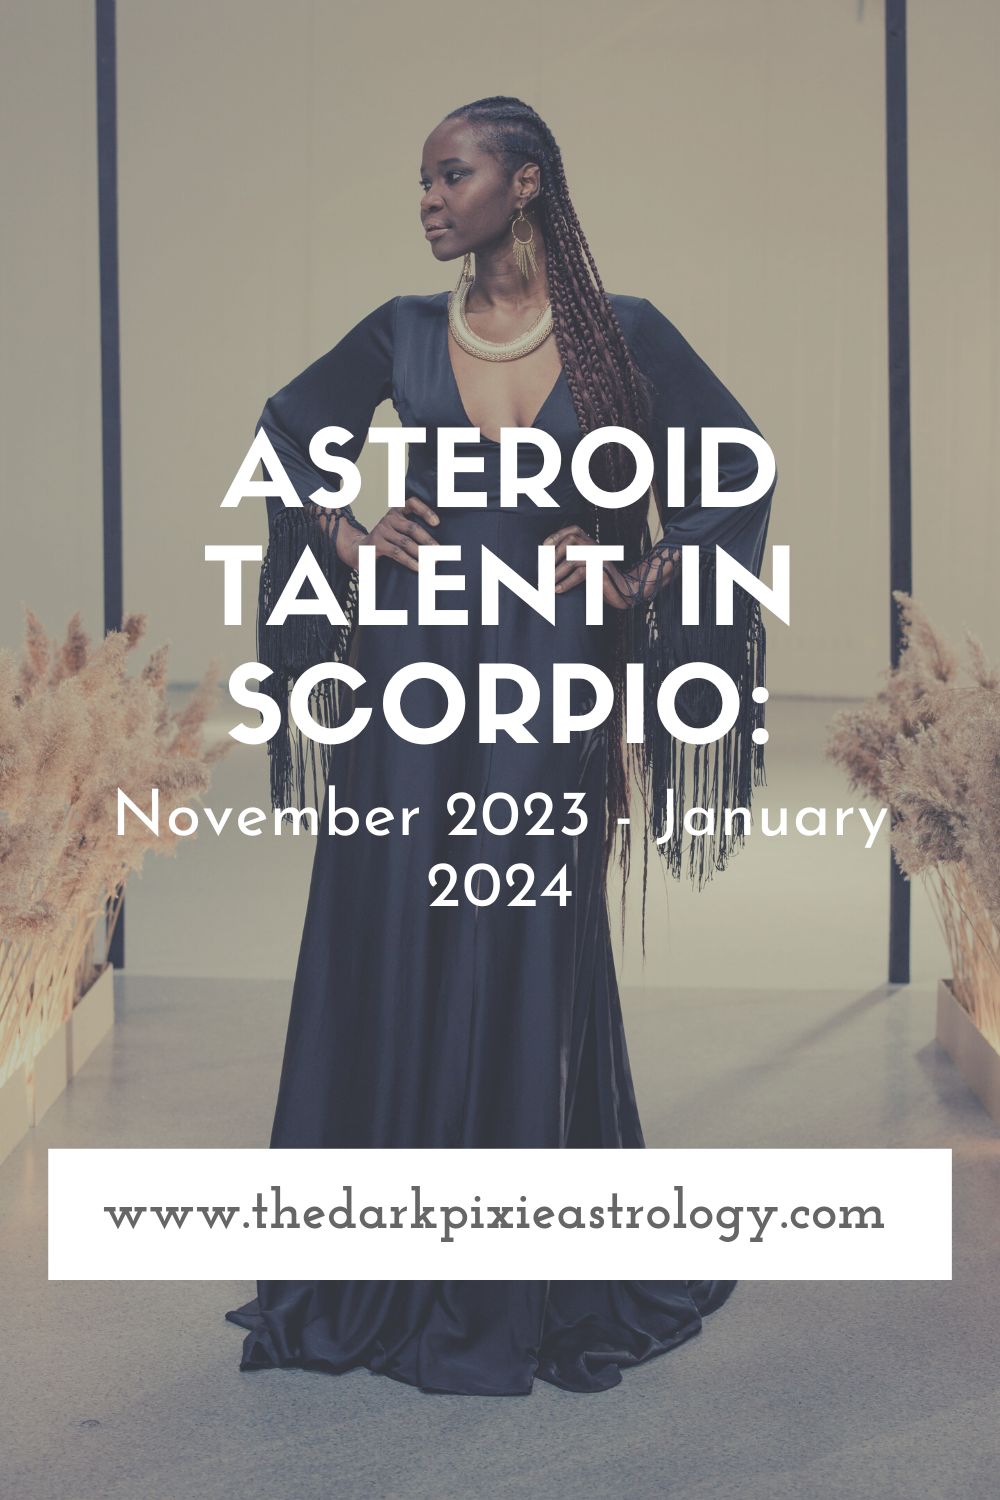 Asteroid Talent in Scorpio: November 2023 - January 2024 - The Dark Pixie Astrology